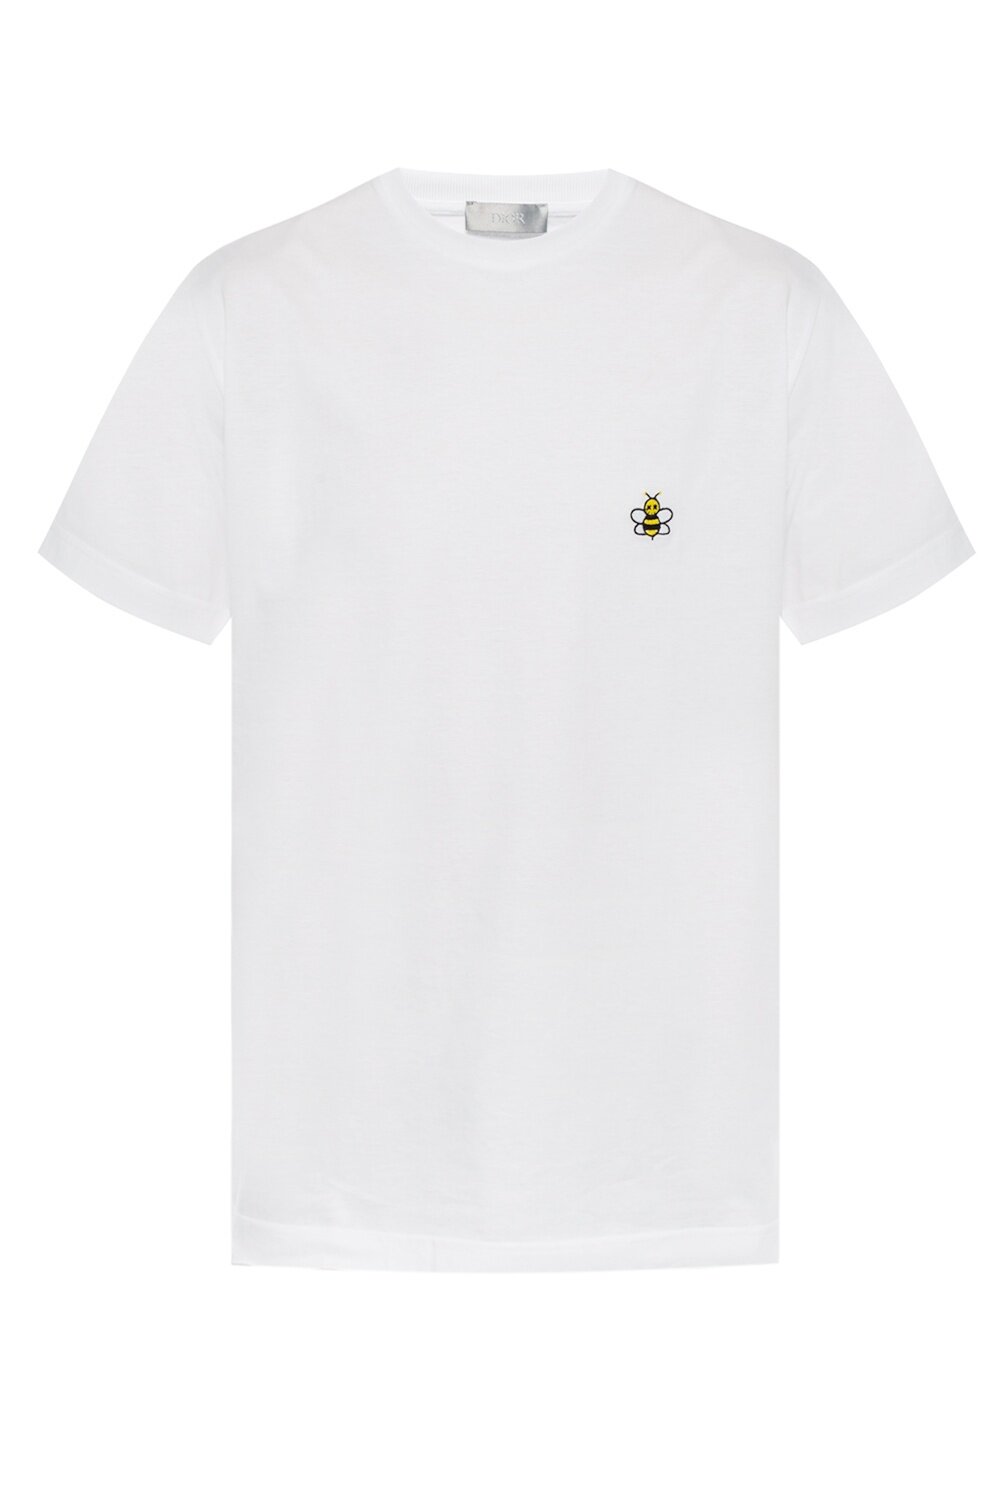 Dior x KAWS Bee T Shirt in White — UFO No More